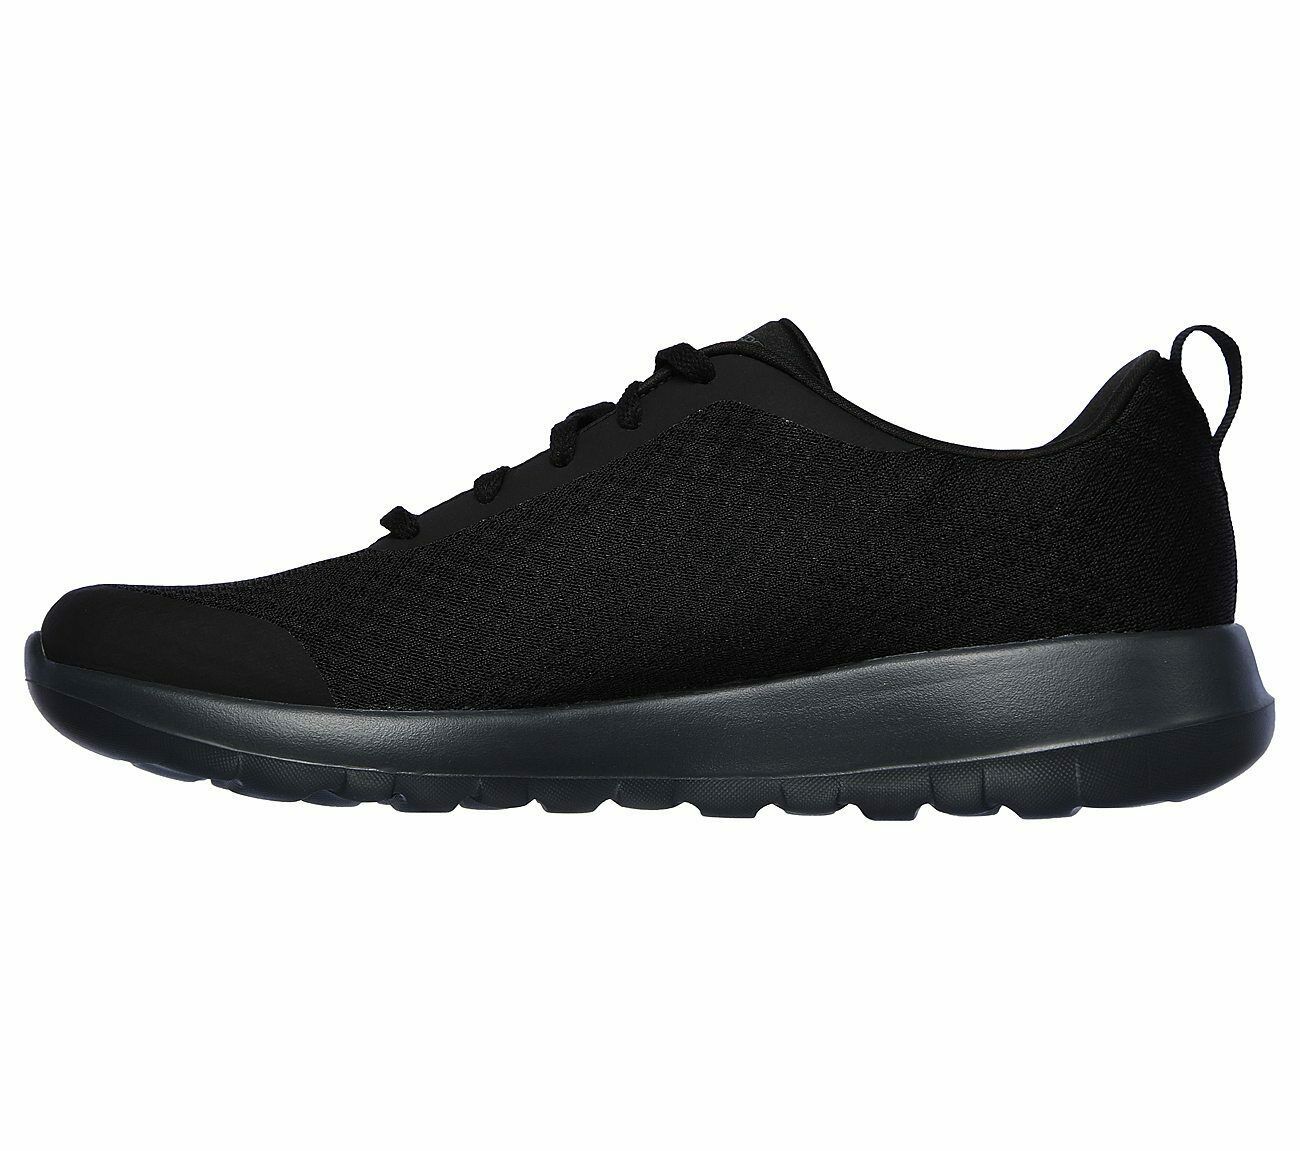 Skechers Black Shoes Men's Go Walk Max Cushion Sport Comfort Casual ...